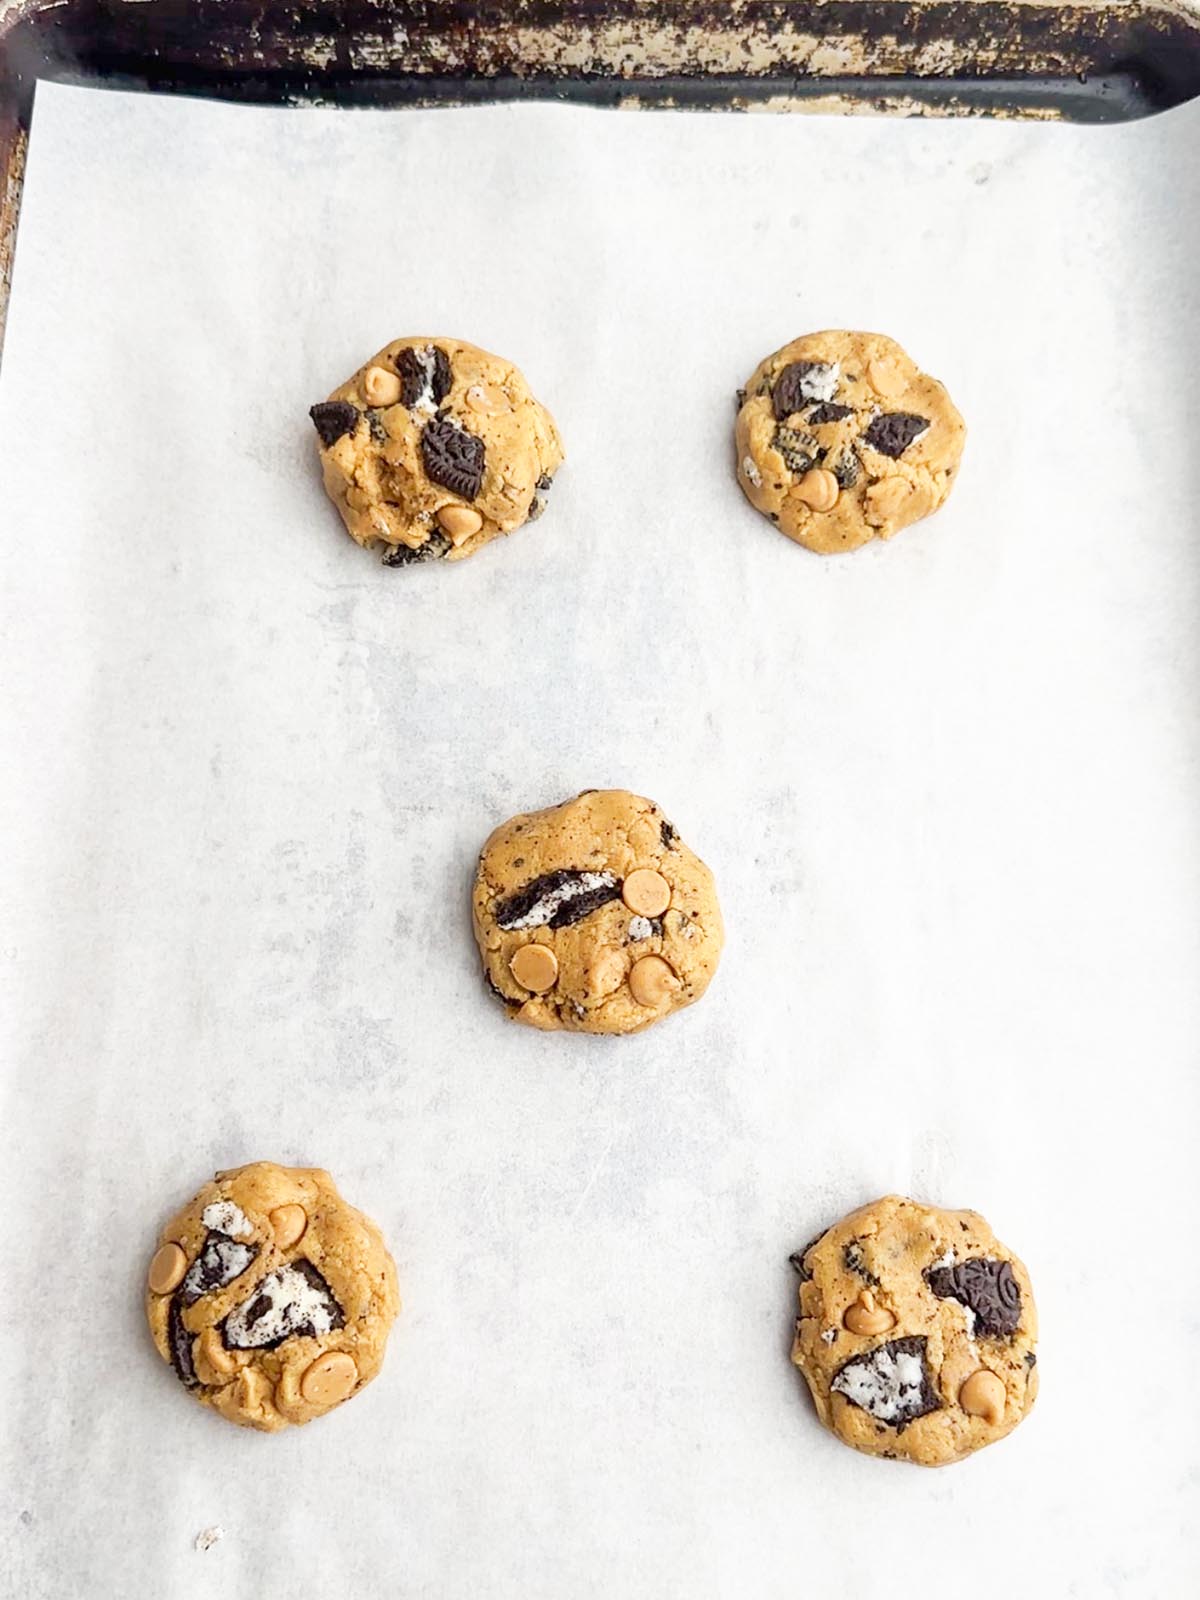 Peanut butter Oreo cookie dough balls on baking sheet.